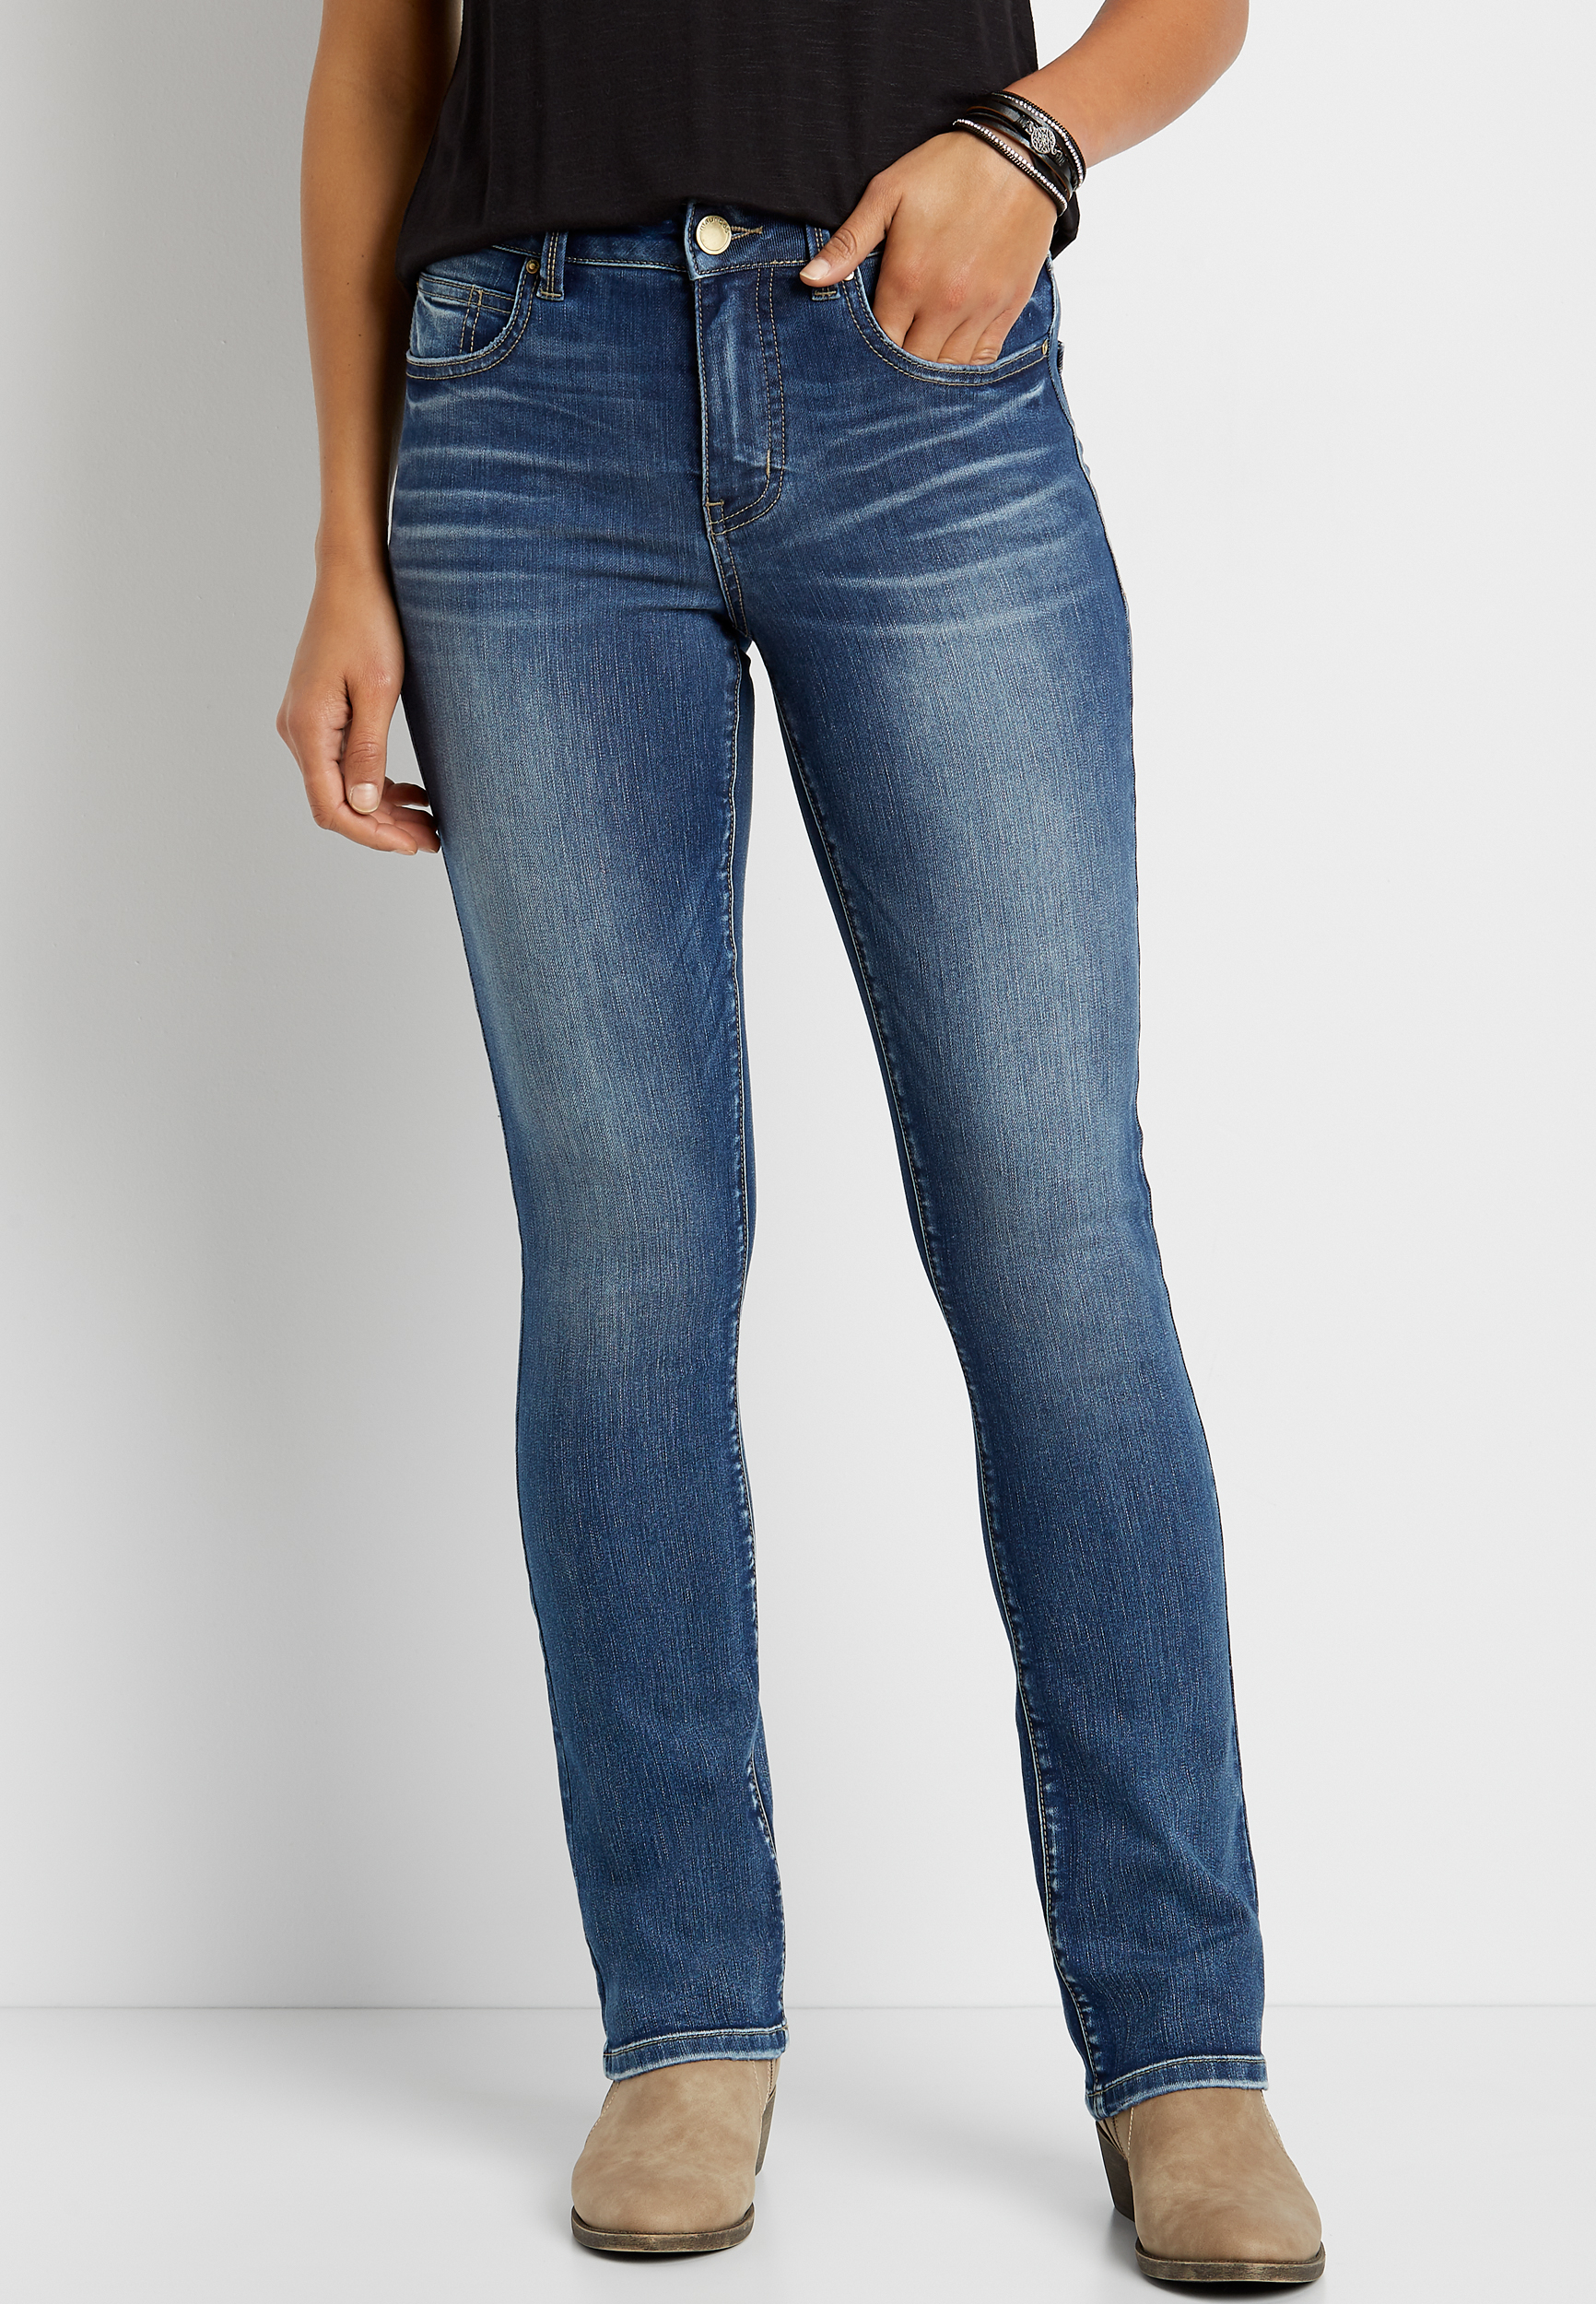 maurices everflex jeans